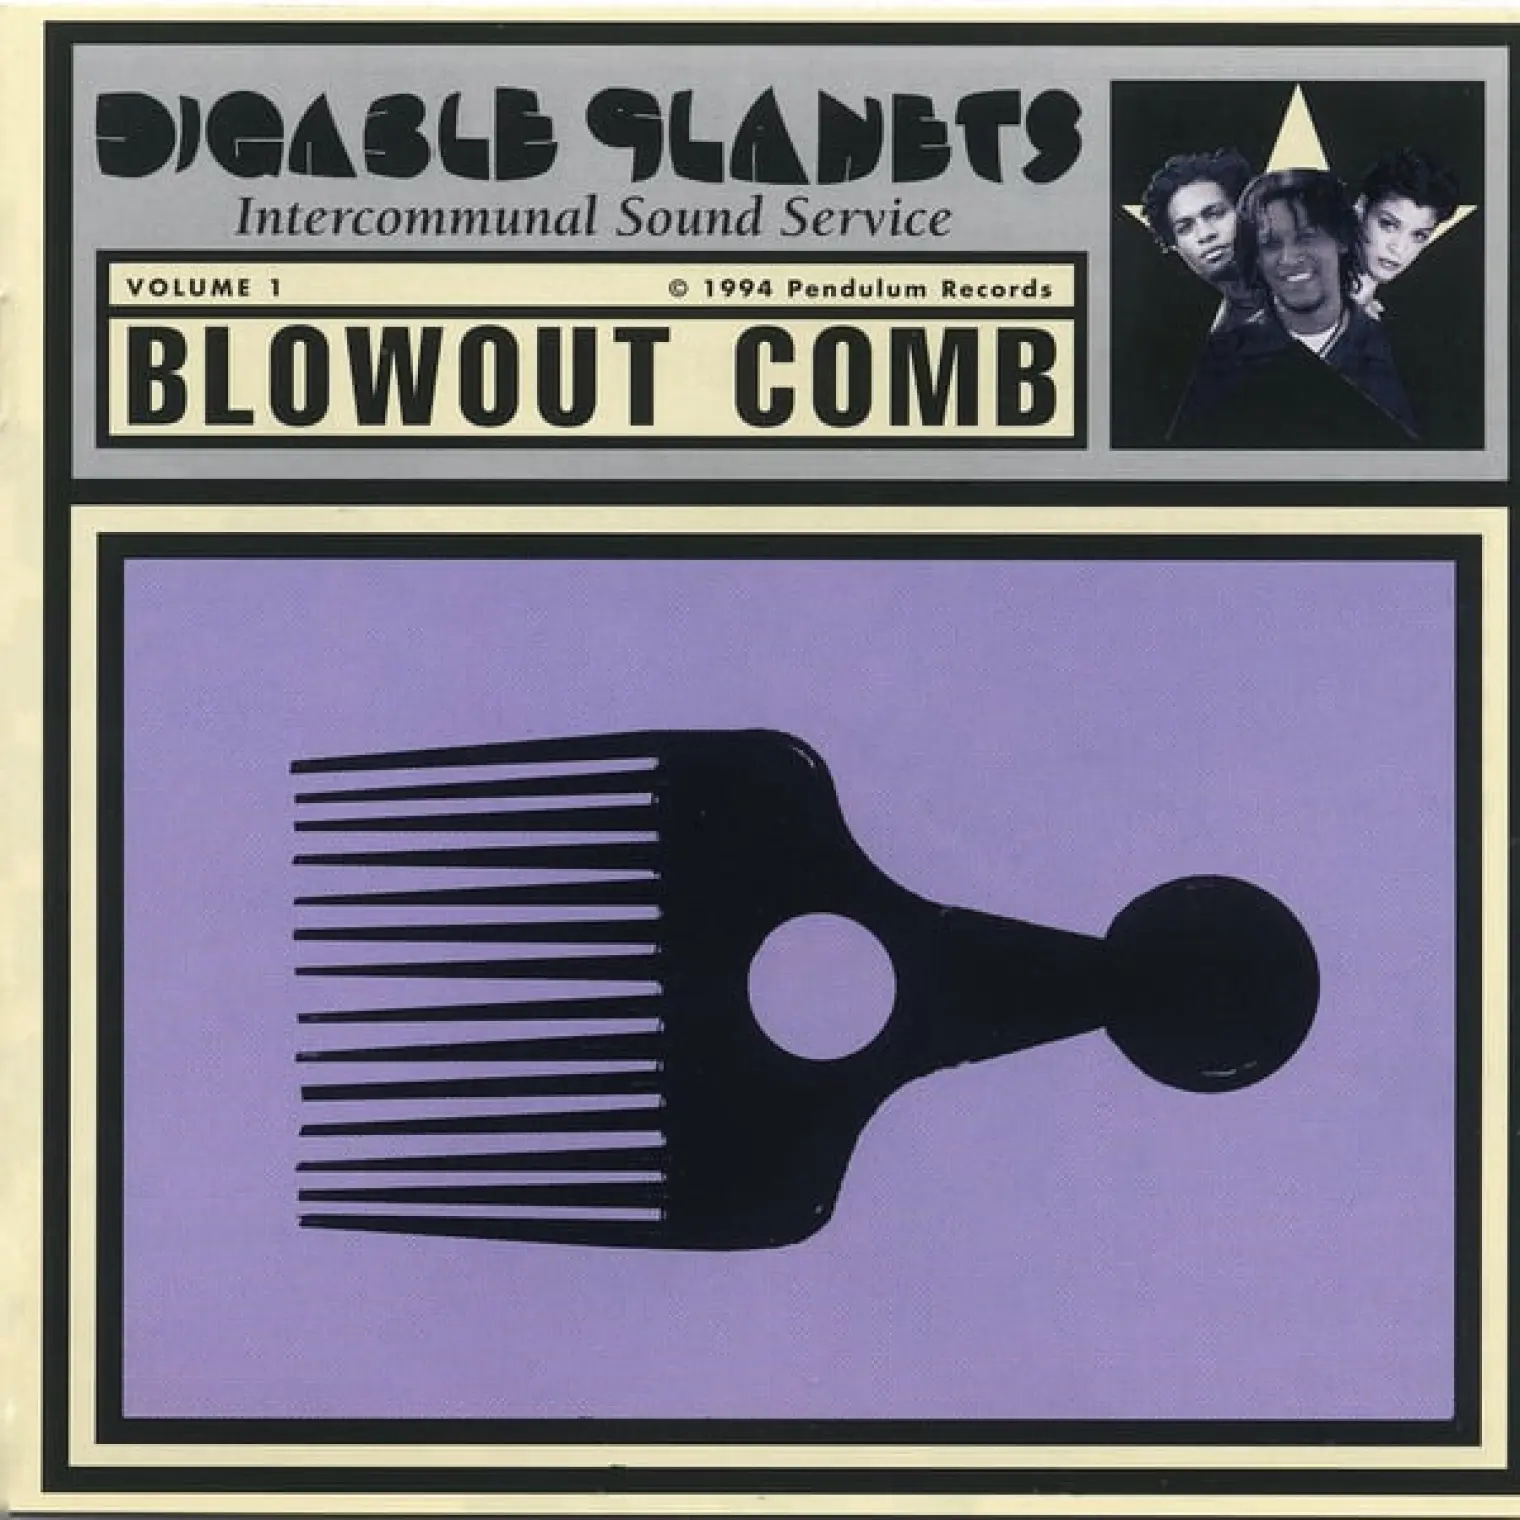 Blowout Comb -  Digable Planets 